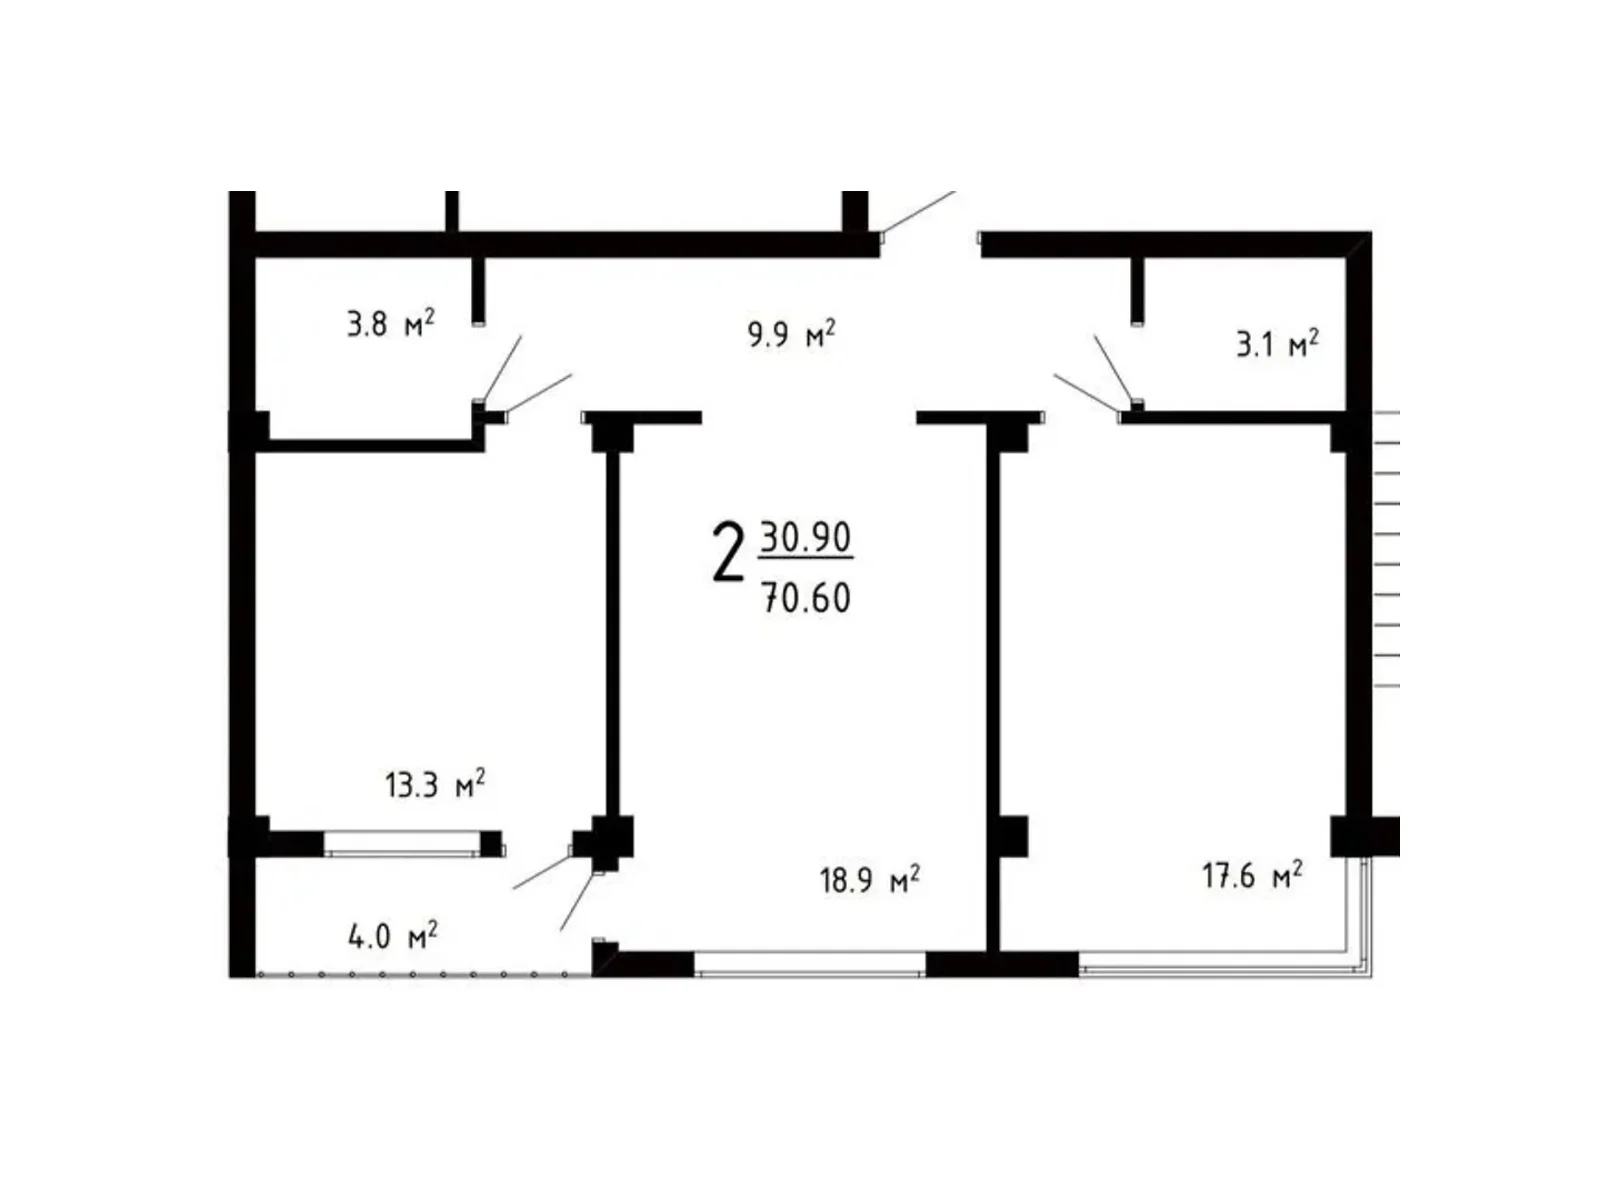 Продается 2-комнатная квартира 70.6 кв. м в Годилове, цена: 74130 $ - фото 1